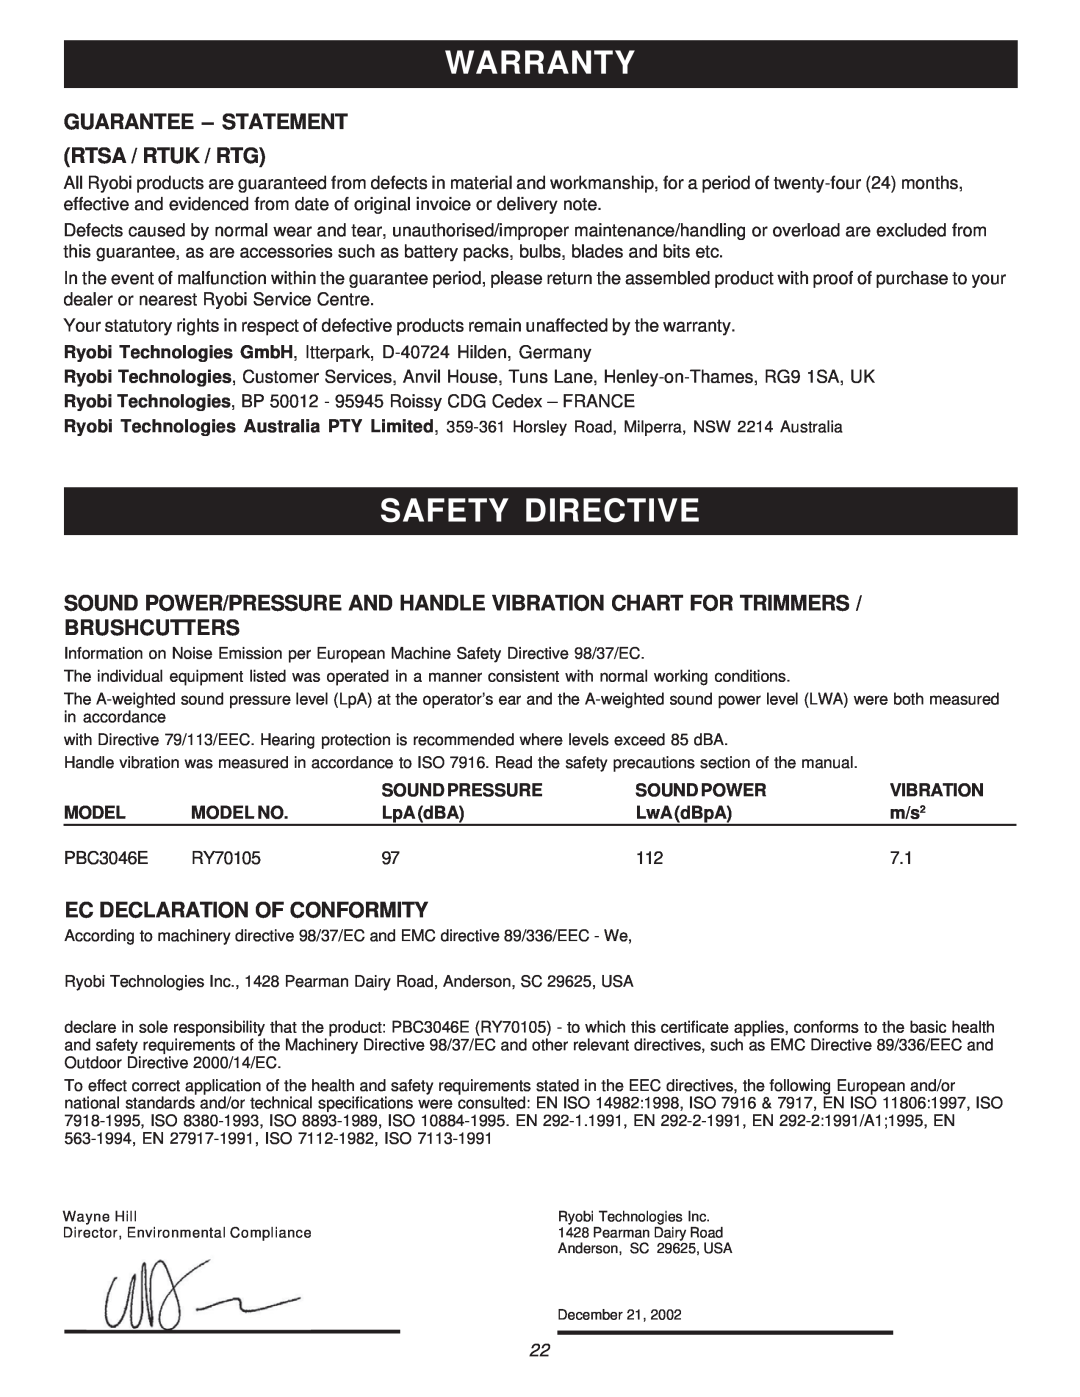 Ryobi Outdoor PBC3046E, RY70105 Warranty, Safety Directive, Guarantee – Statement Rtsa / Rtuk / Rtg, Sound Pressure, Model 